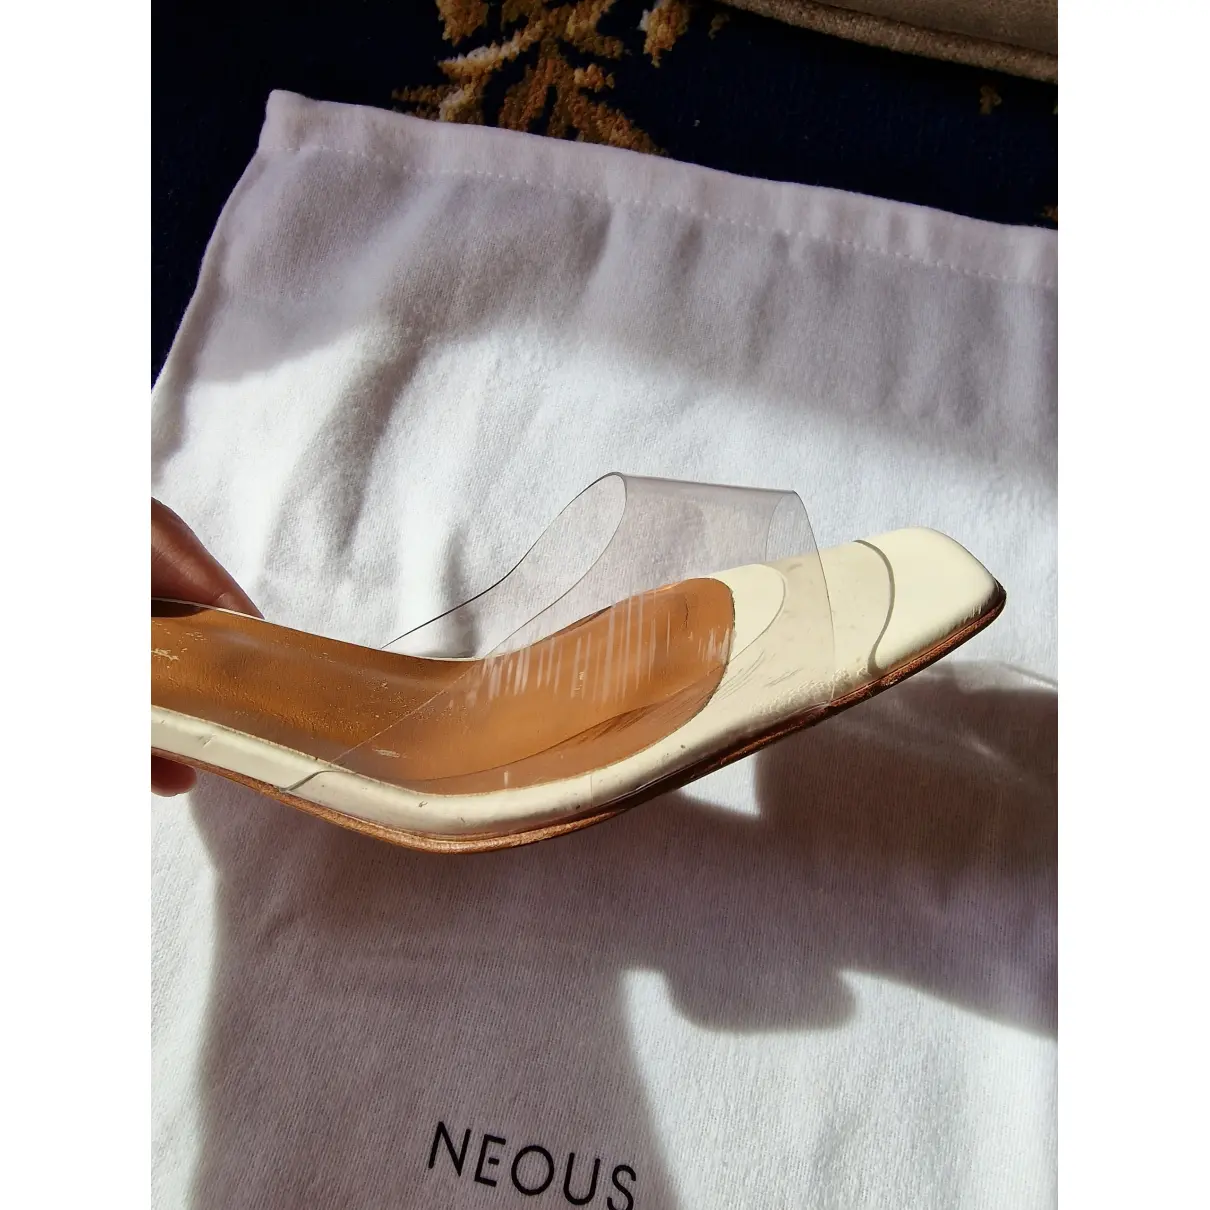 Opus leather sandal Neous